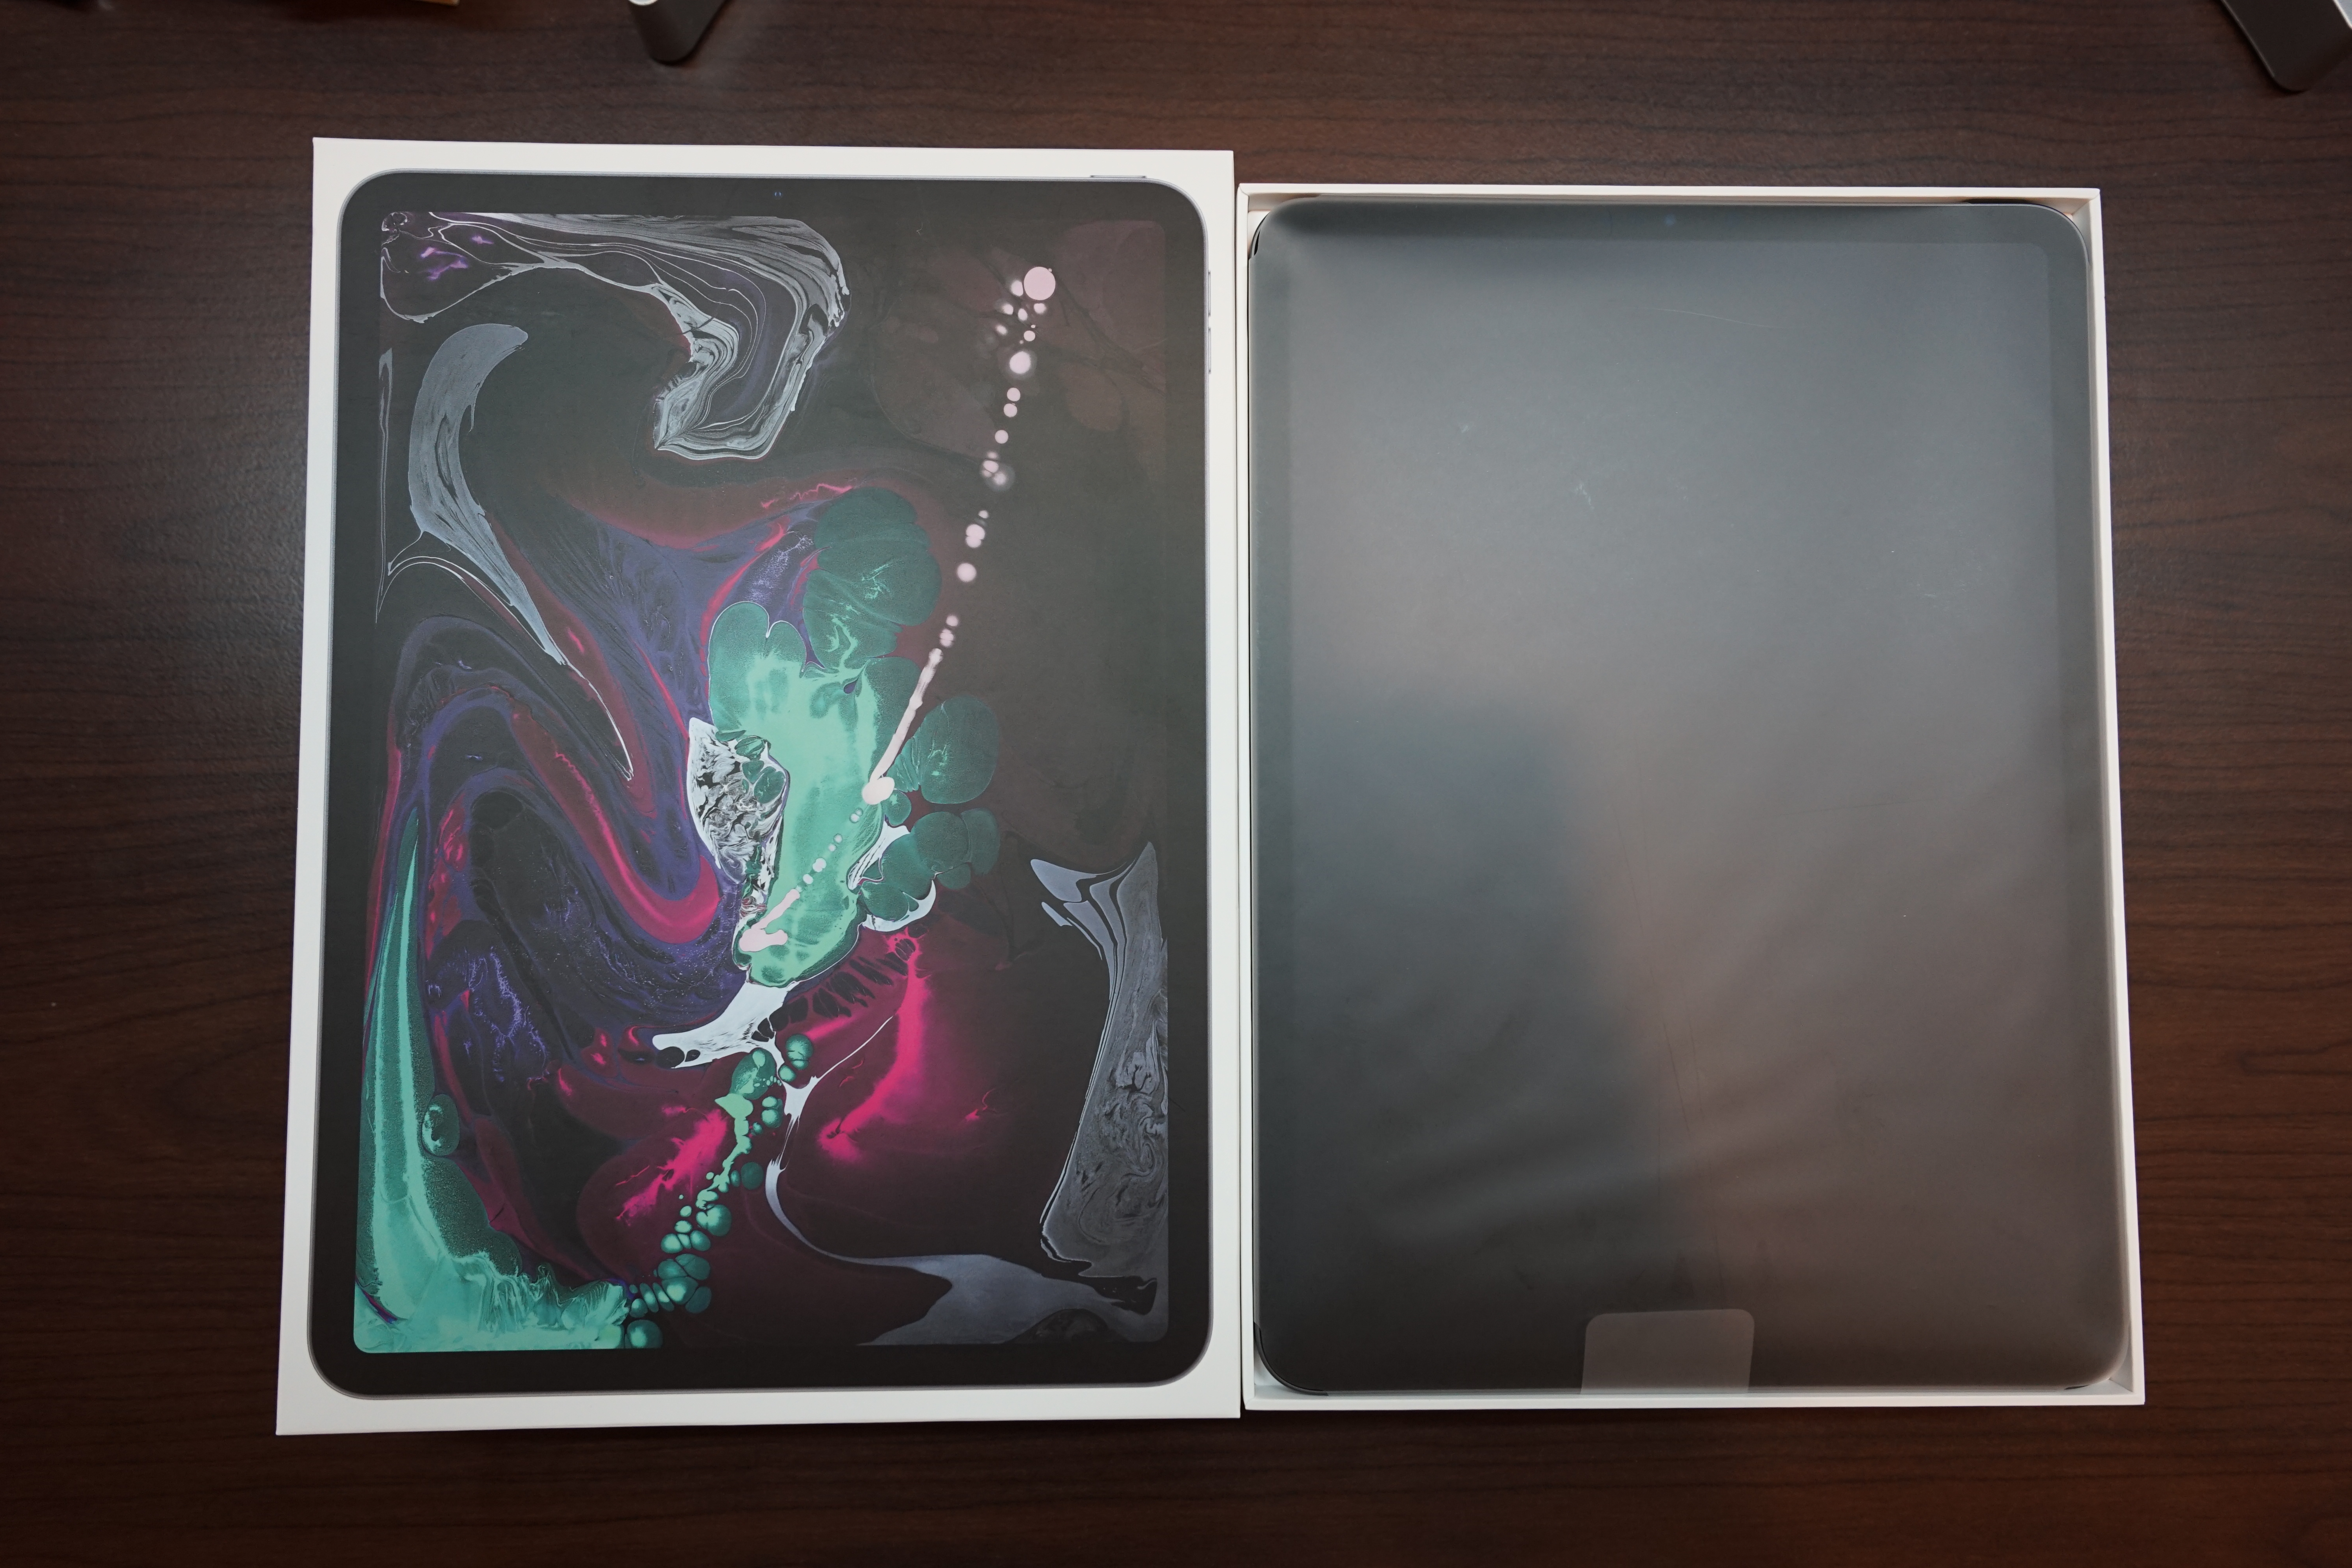 iPad Pro 11-inch Inside the box